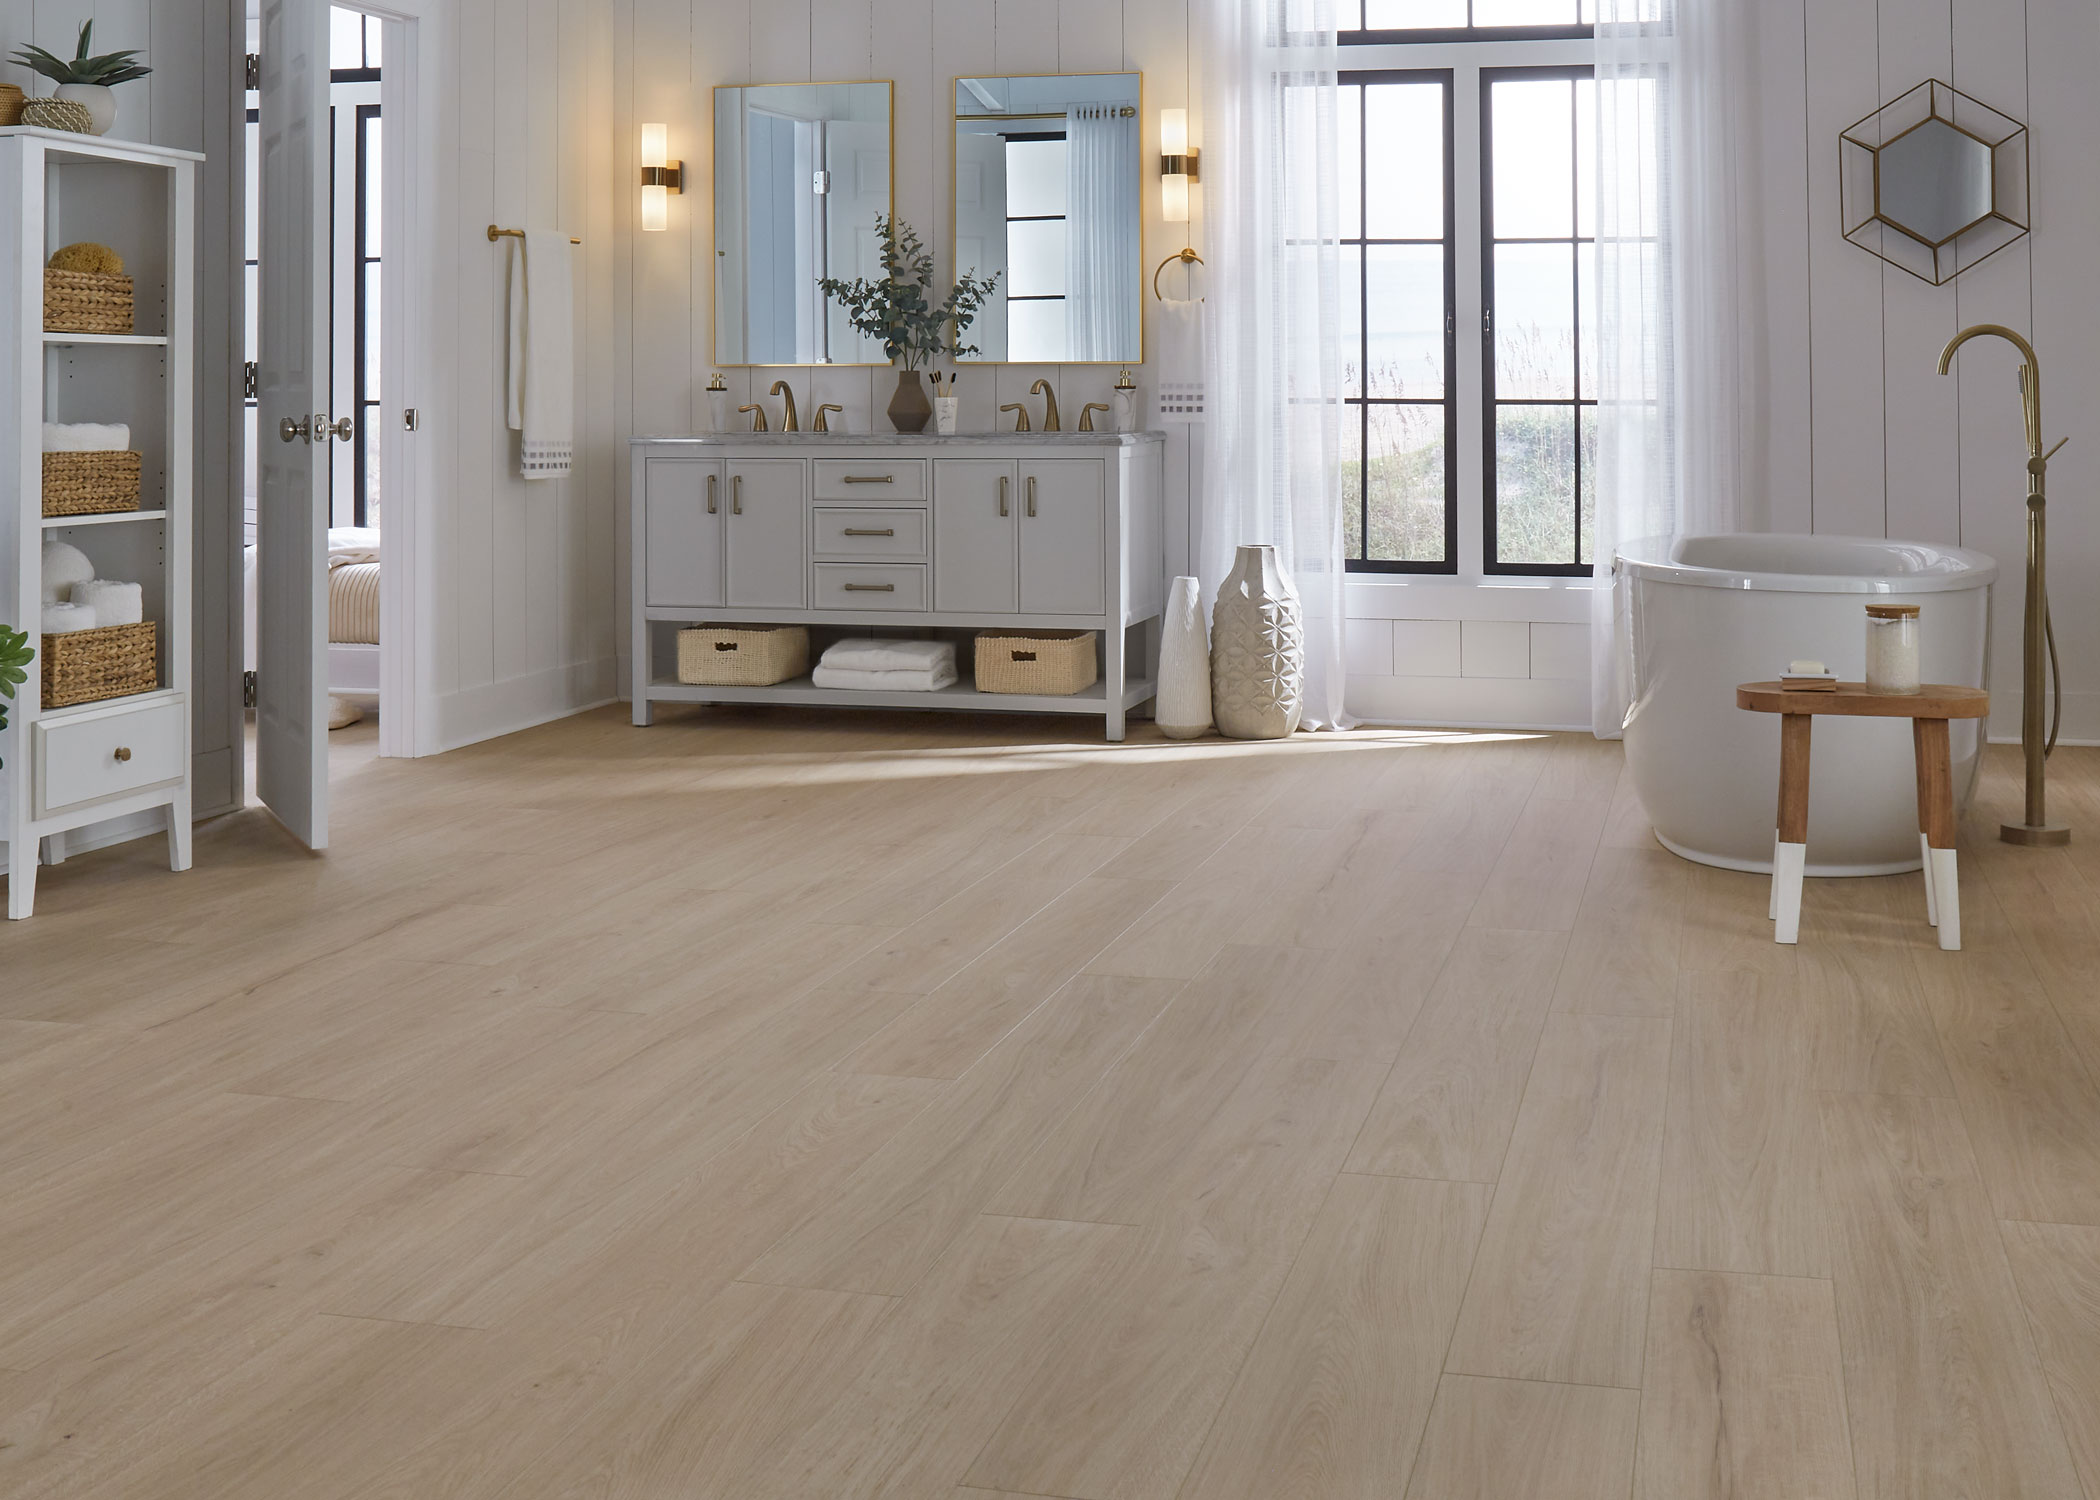 blonde waterproof rigid vinyl plank floor in bathroom with light gray dual vanity plus oval freestanding tub and small light wood stool and shiplap walls